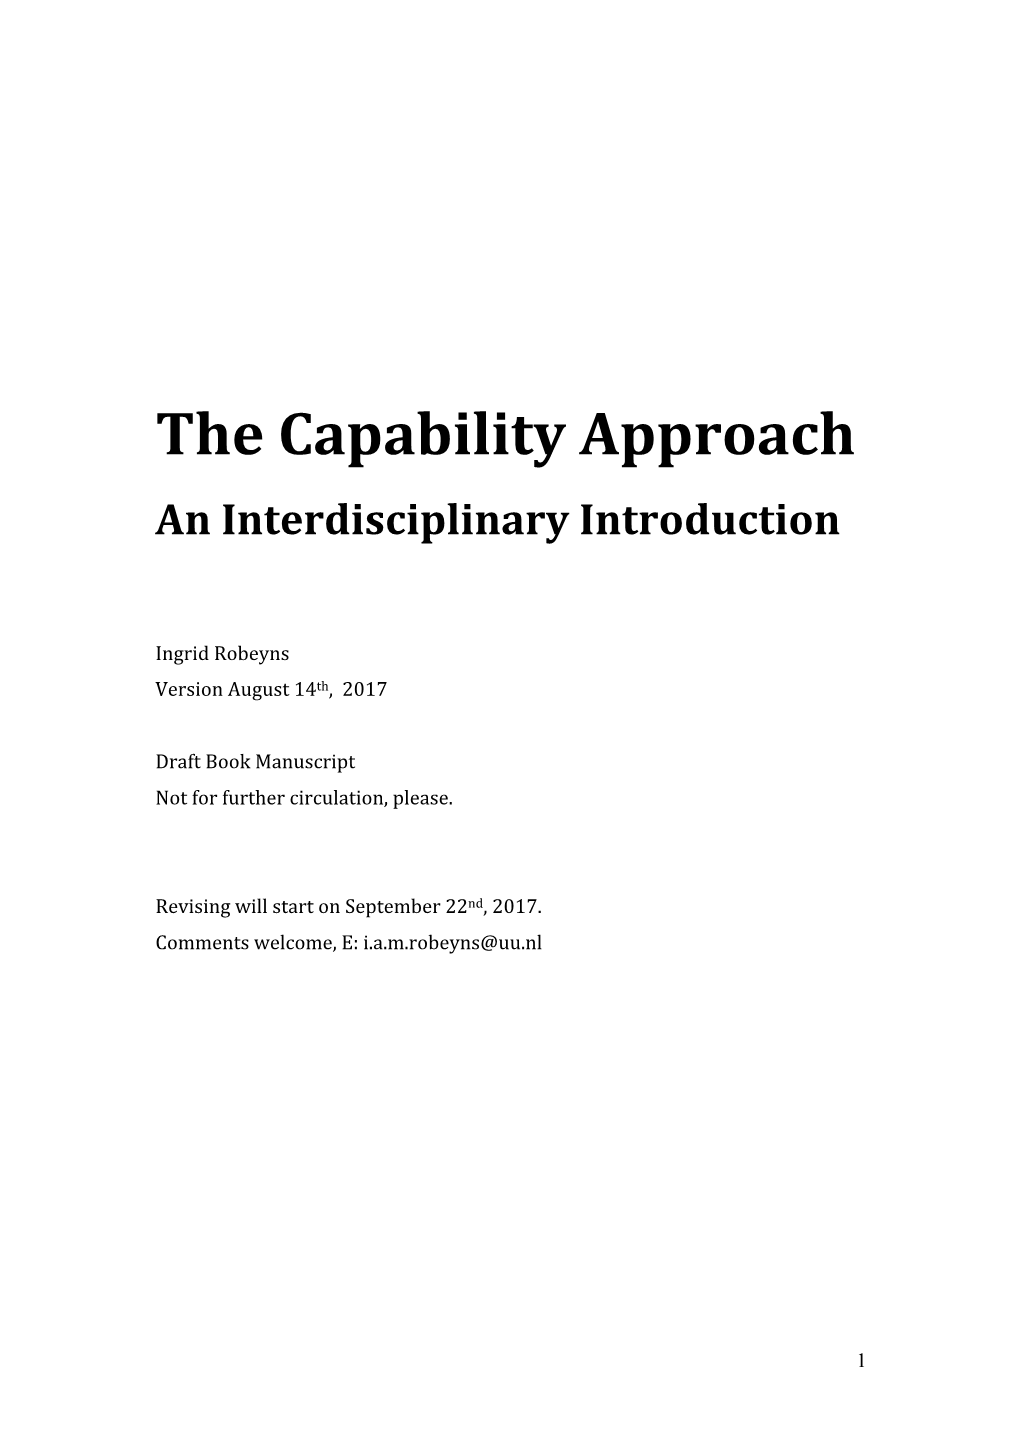 The Capability Approach an Interdisciplinary Introduction